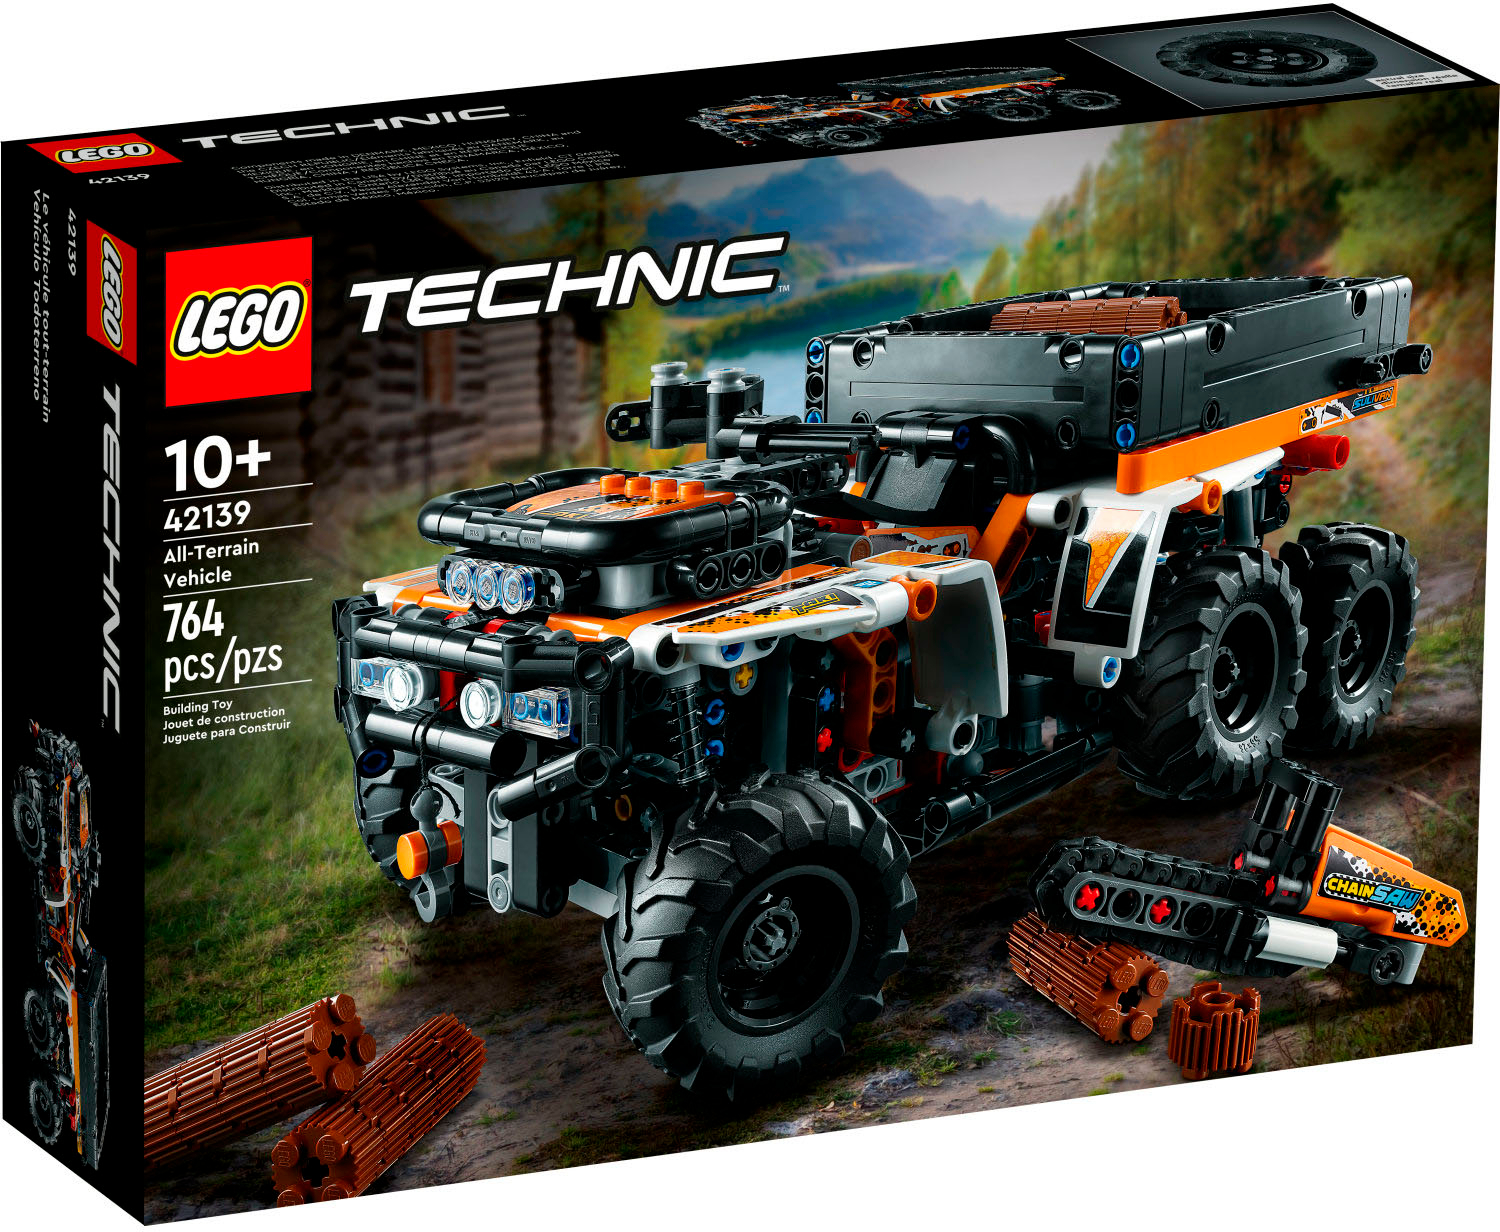 LEGO Technic All-Terrain Vehicle 42139 - Best Buy